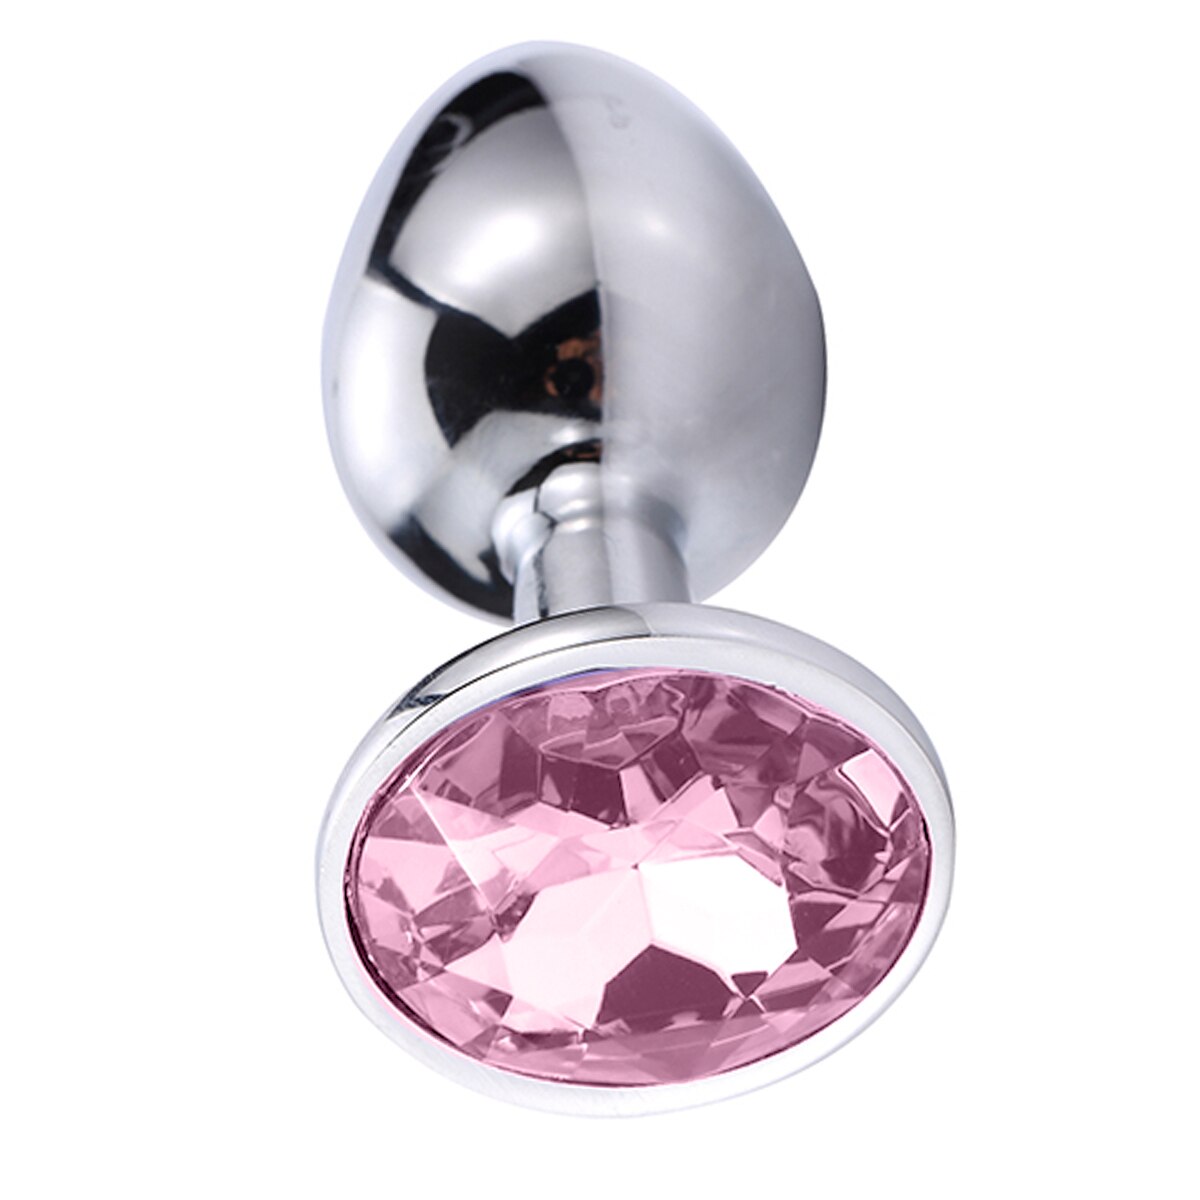 ВТУЛКА АНАЛЬНАЯ СЕРЕБРЯНАЯ, L 95 мм D 42 мм, вес 156г, цвет кристалла нежно-розовый